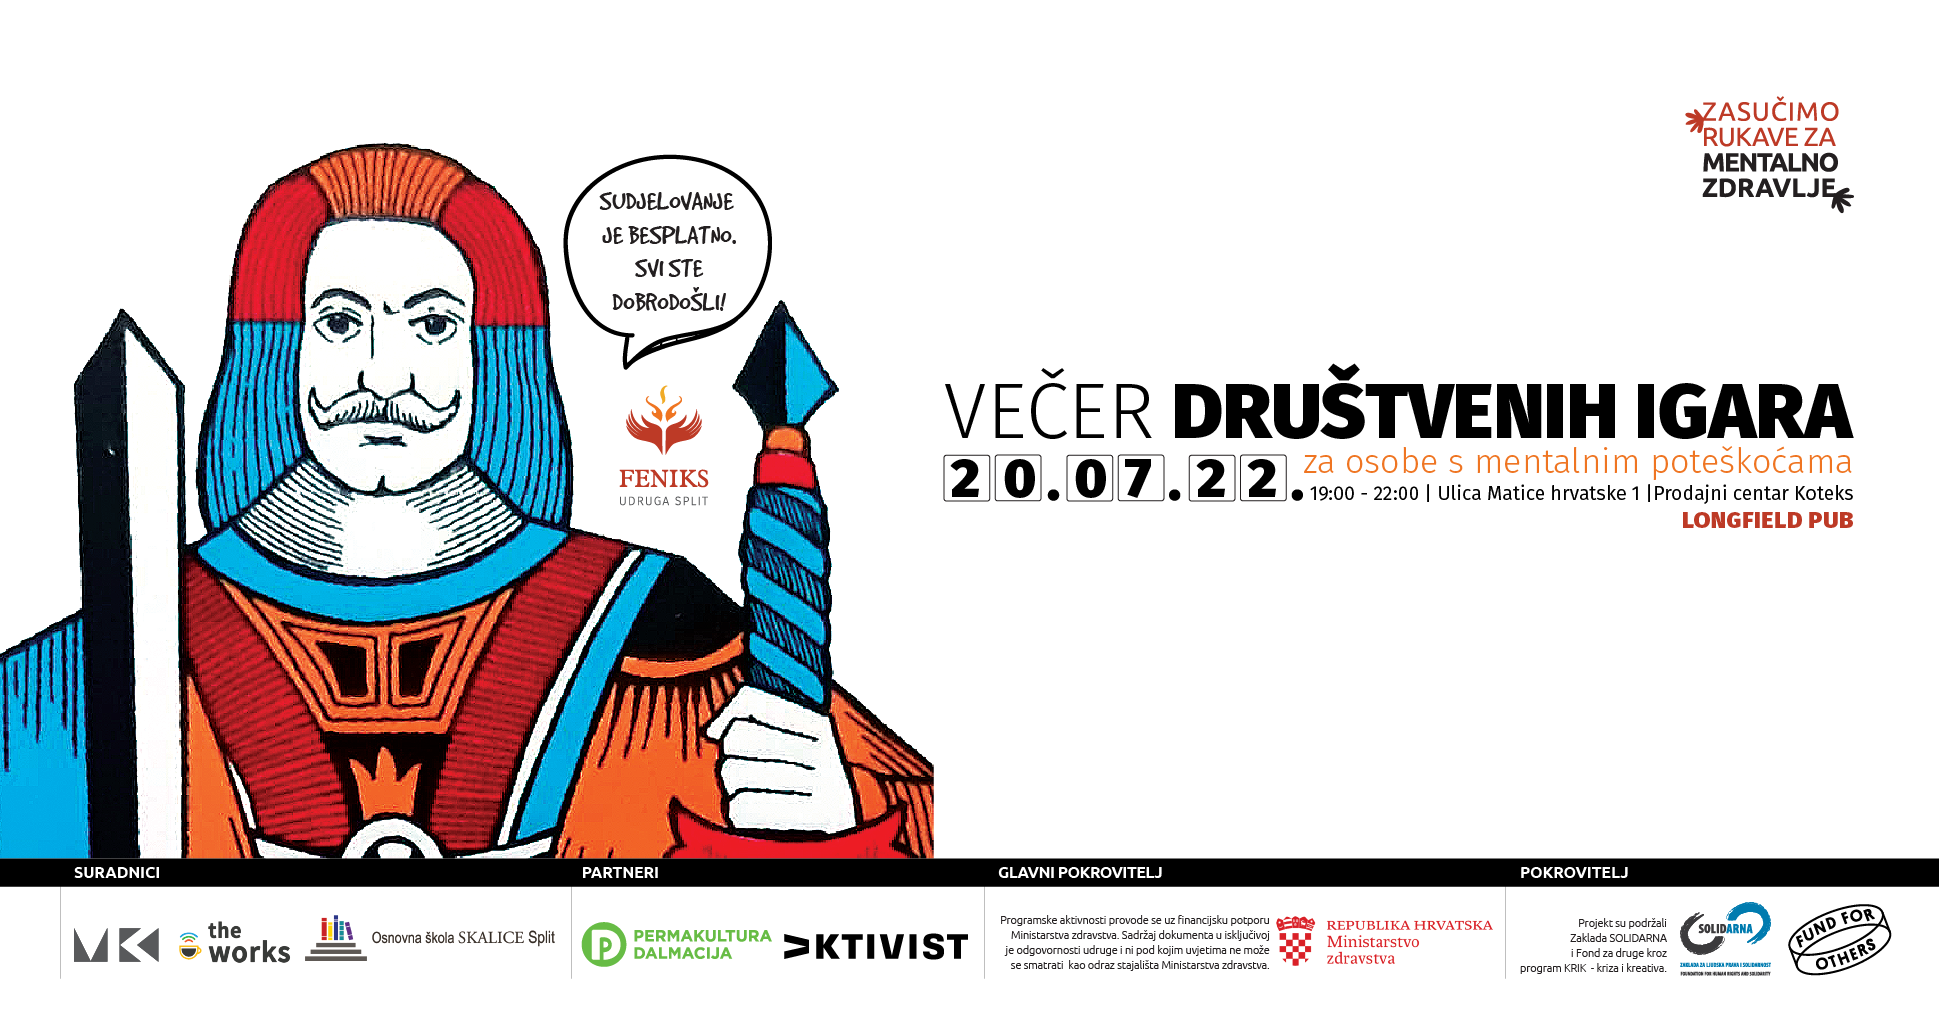 Vecer-drustvenih-igara-cover-event-200722